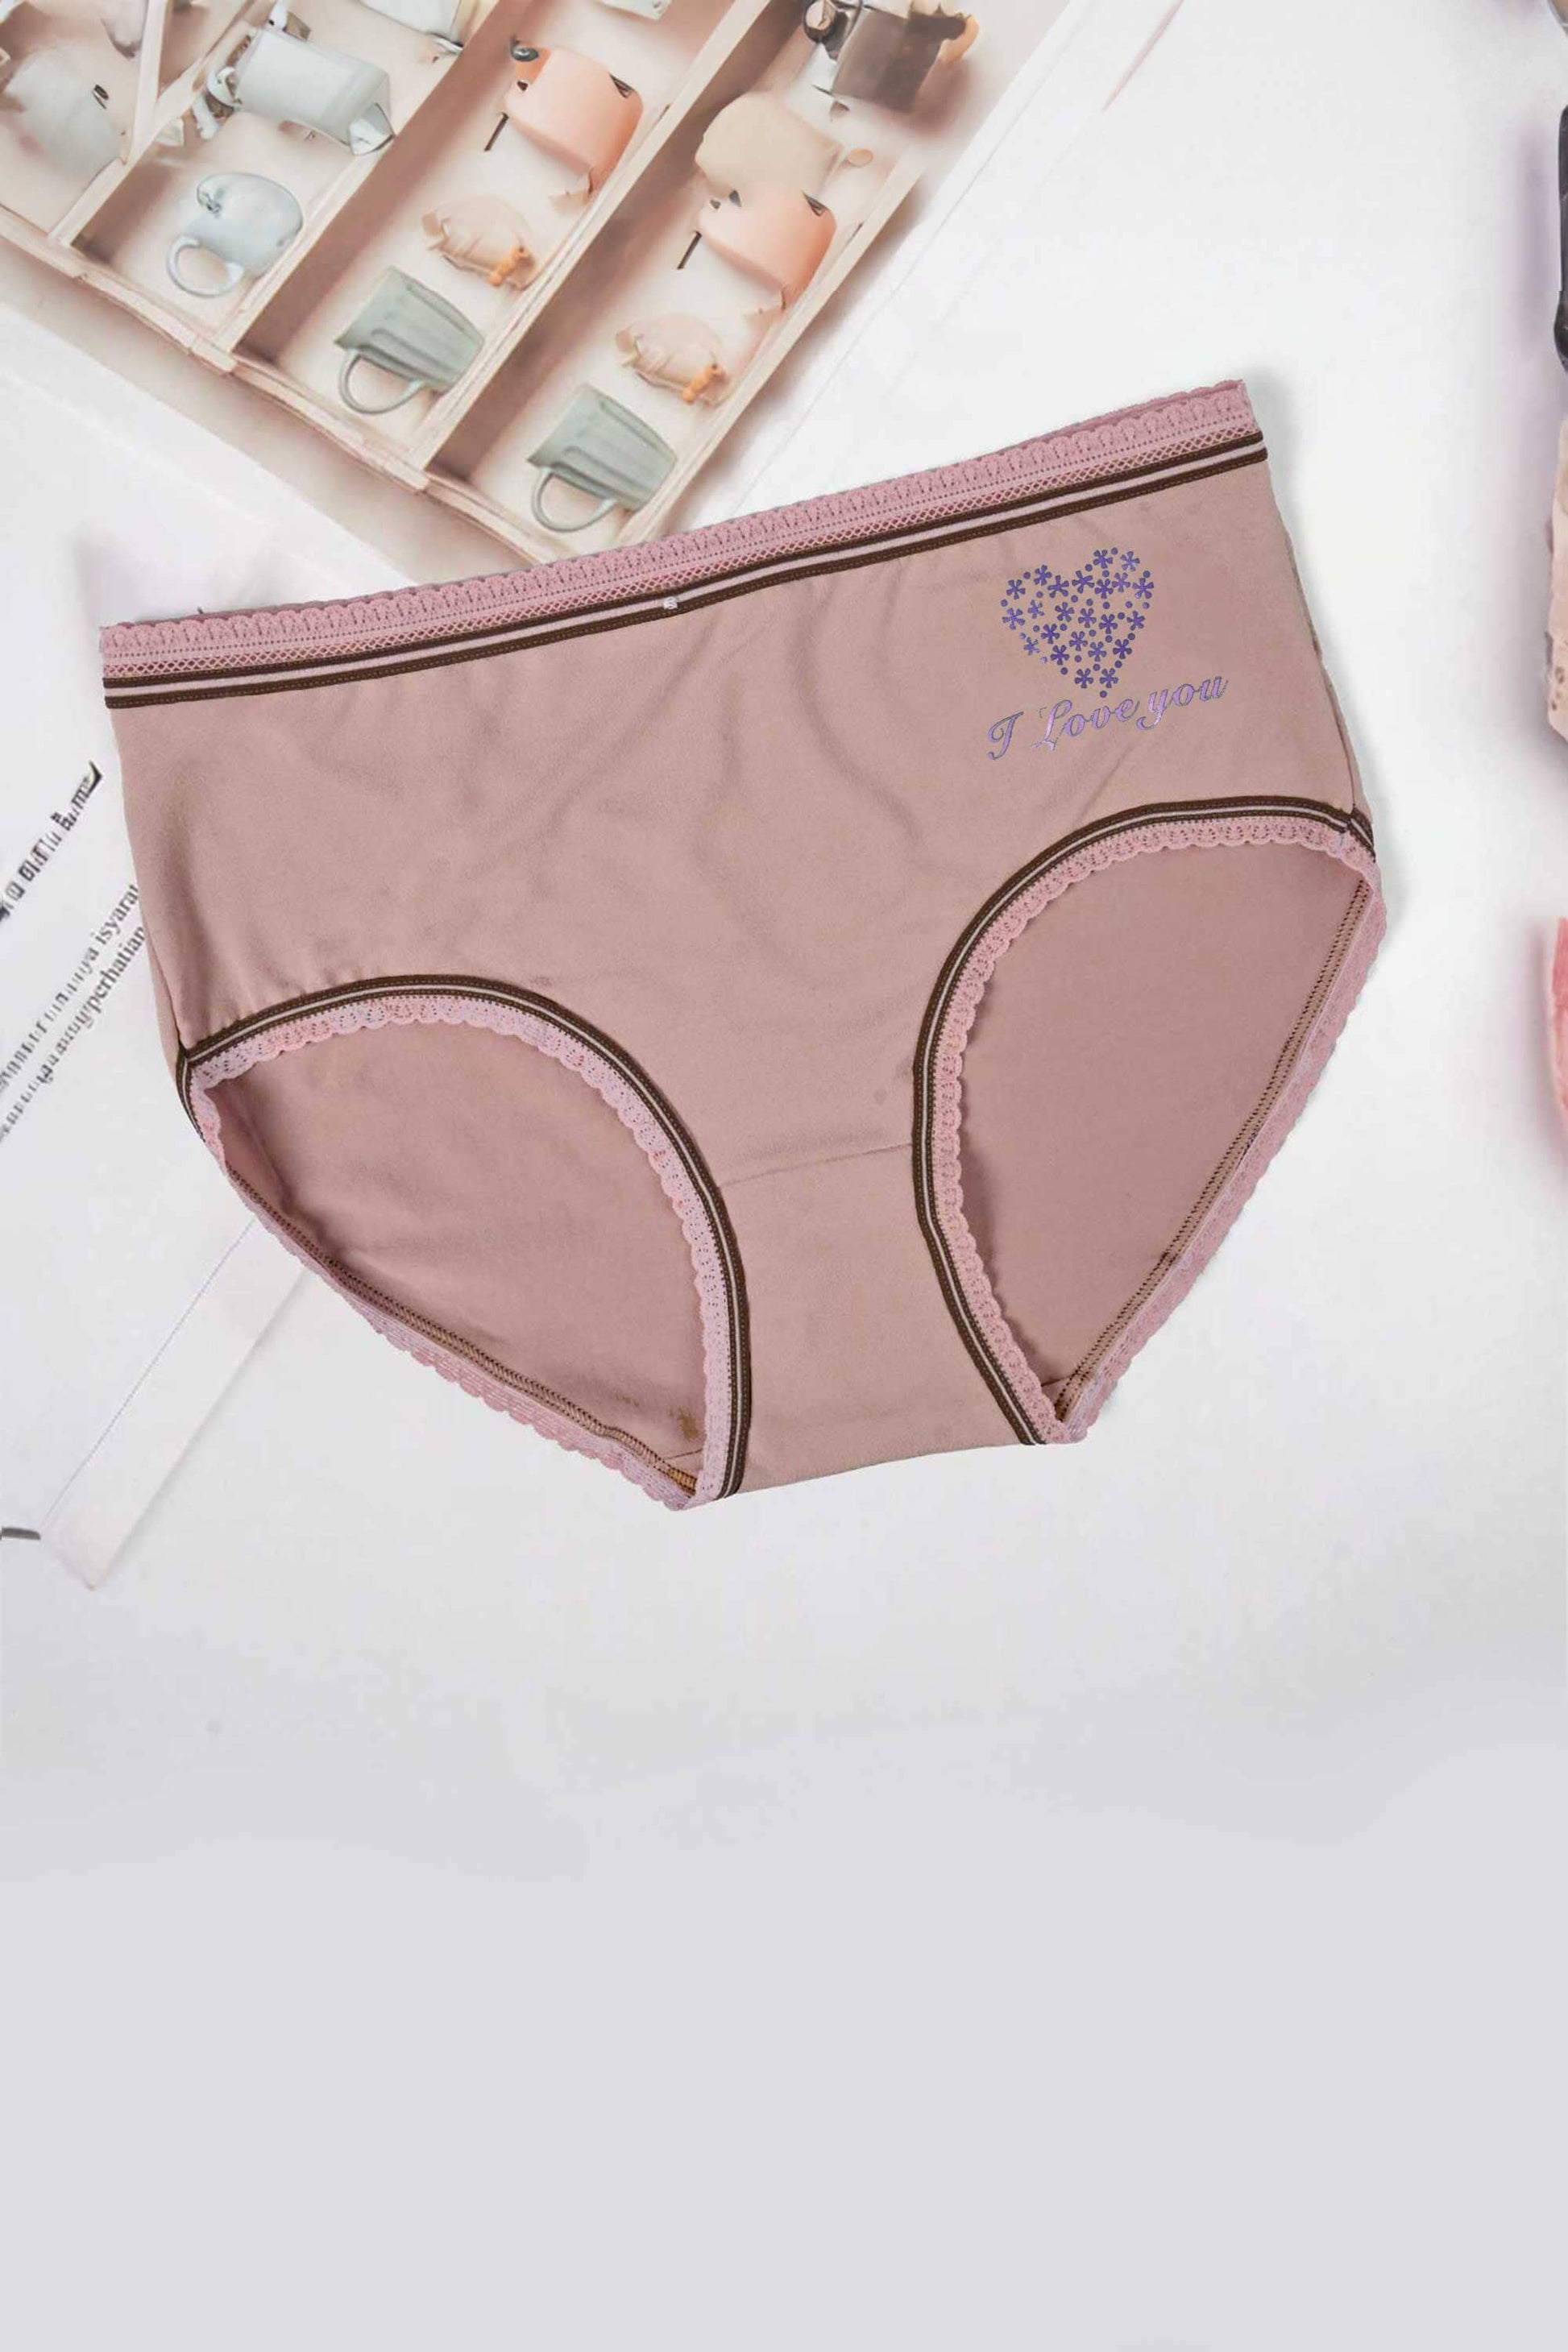 Fashion Women's Heart Printed Lace Design Underwear